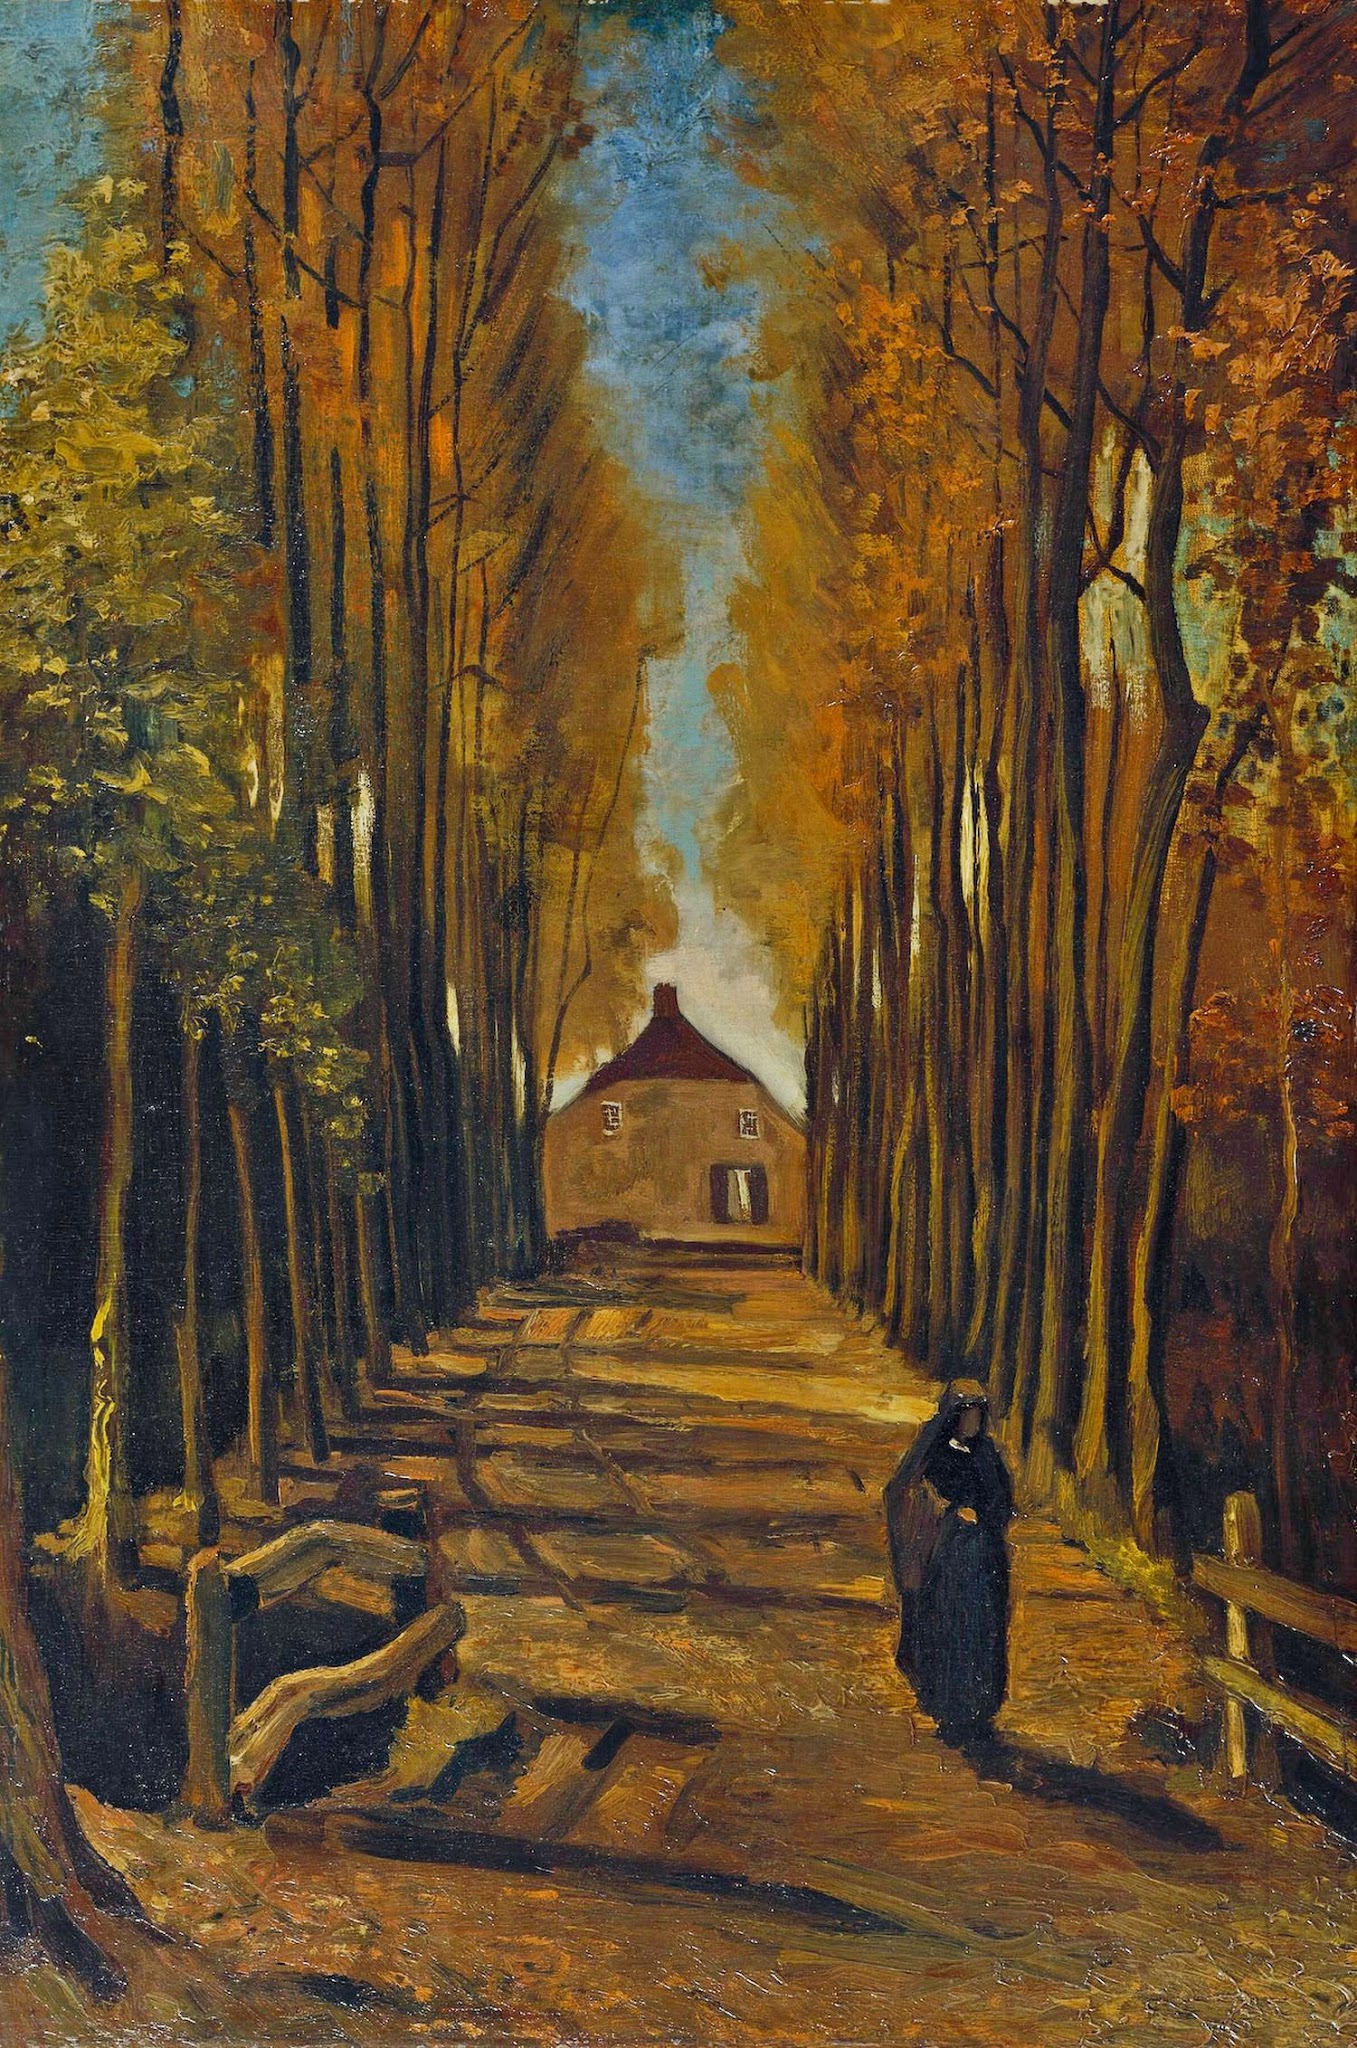 Avenue of Poplars in Autumn by Vincent van Gogh